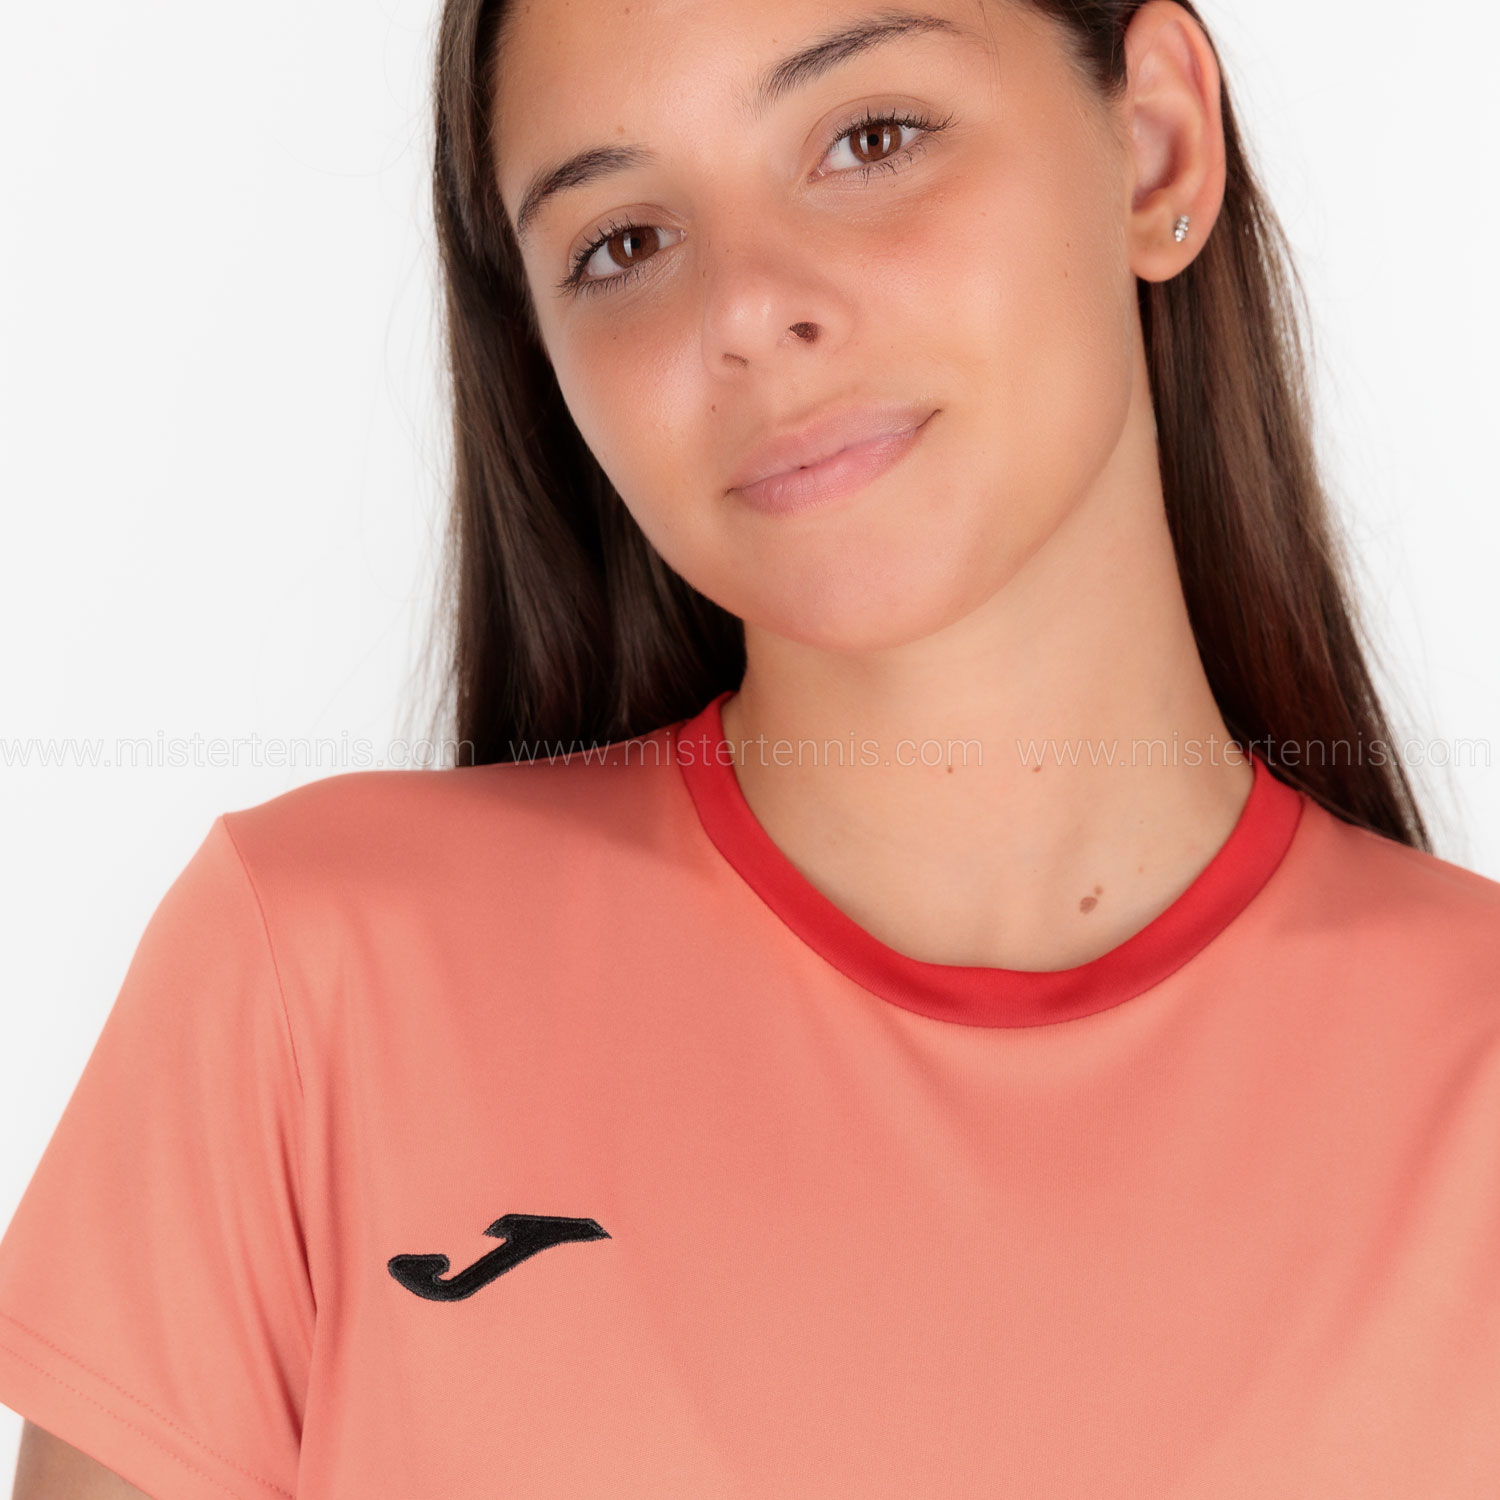 Joma Winner II T-Shirt - Fluor Orange